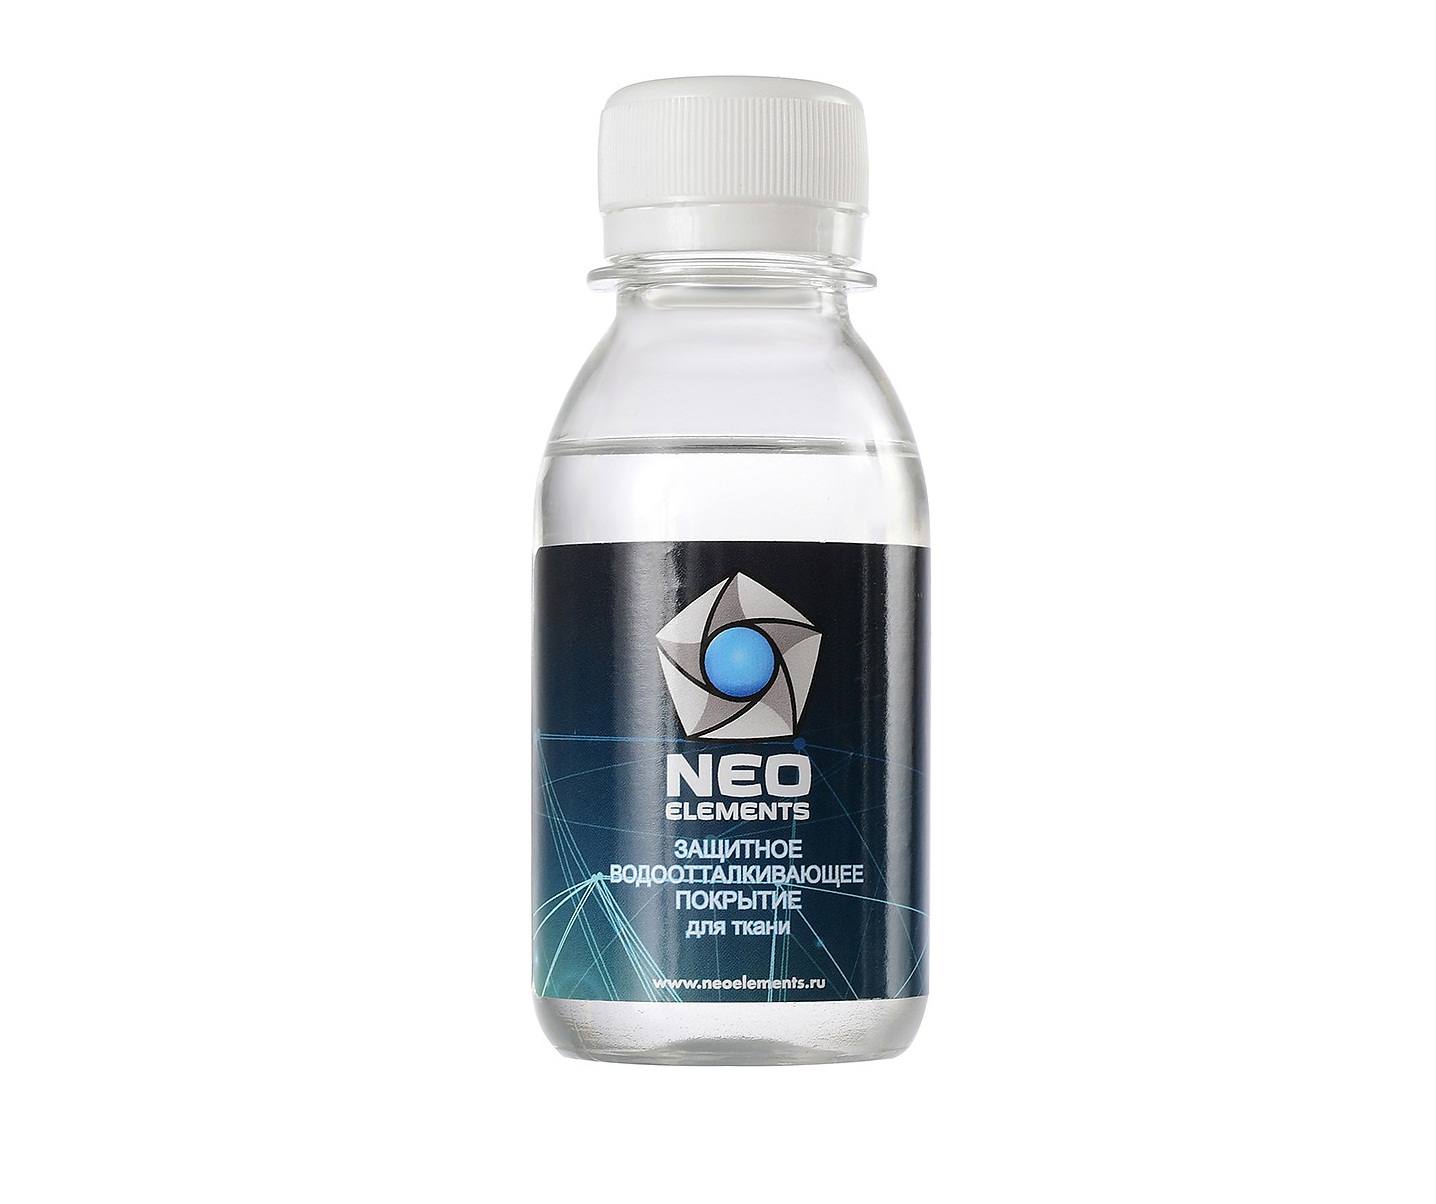 Водоотталкивающие нанопокрытие NEO ELEMENTS